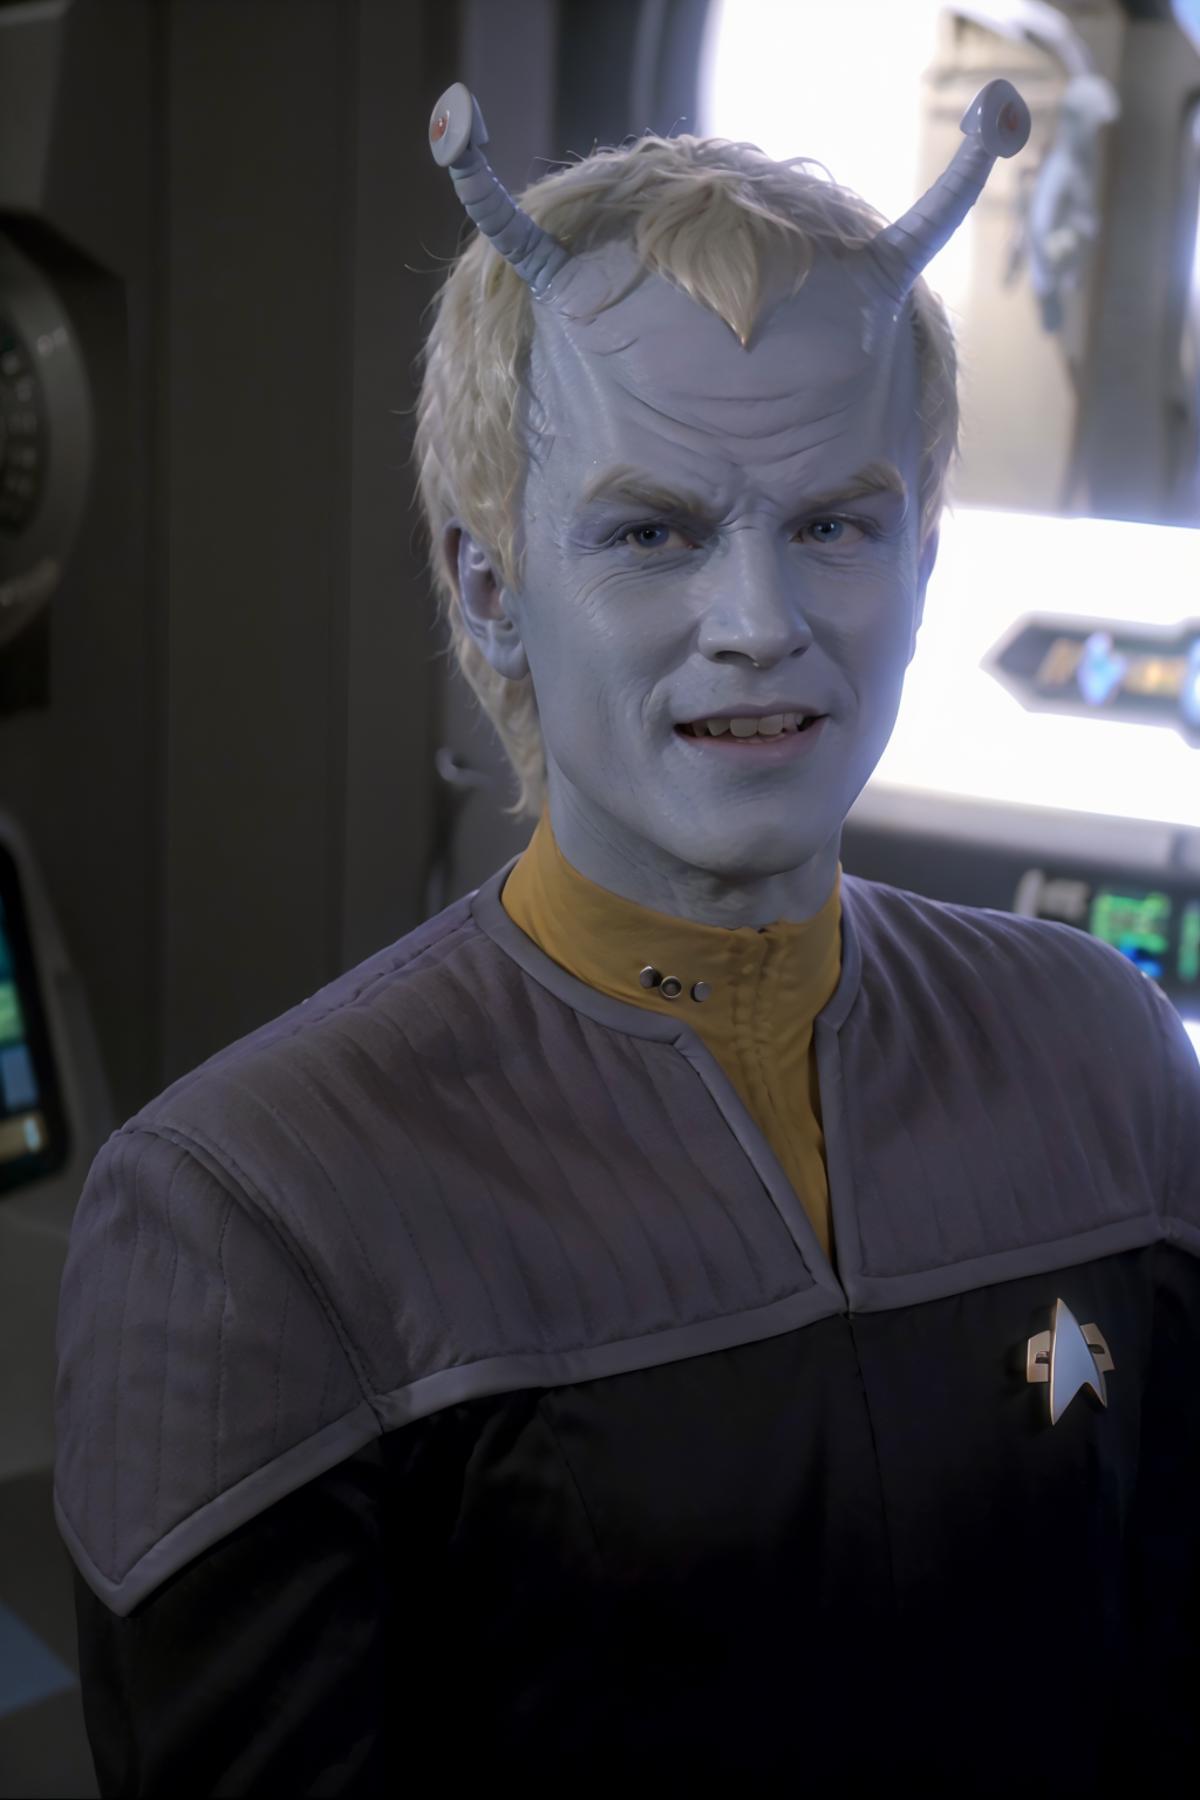 Star Trek DS9 uniforms image by praguepride